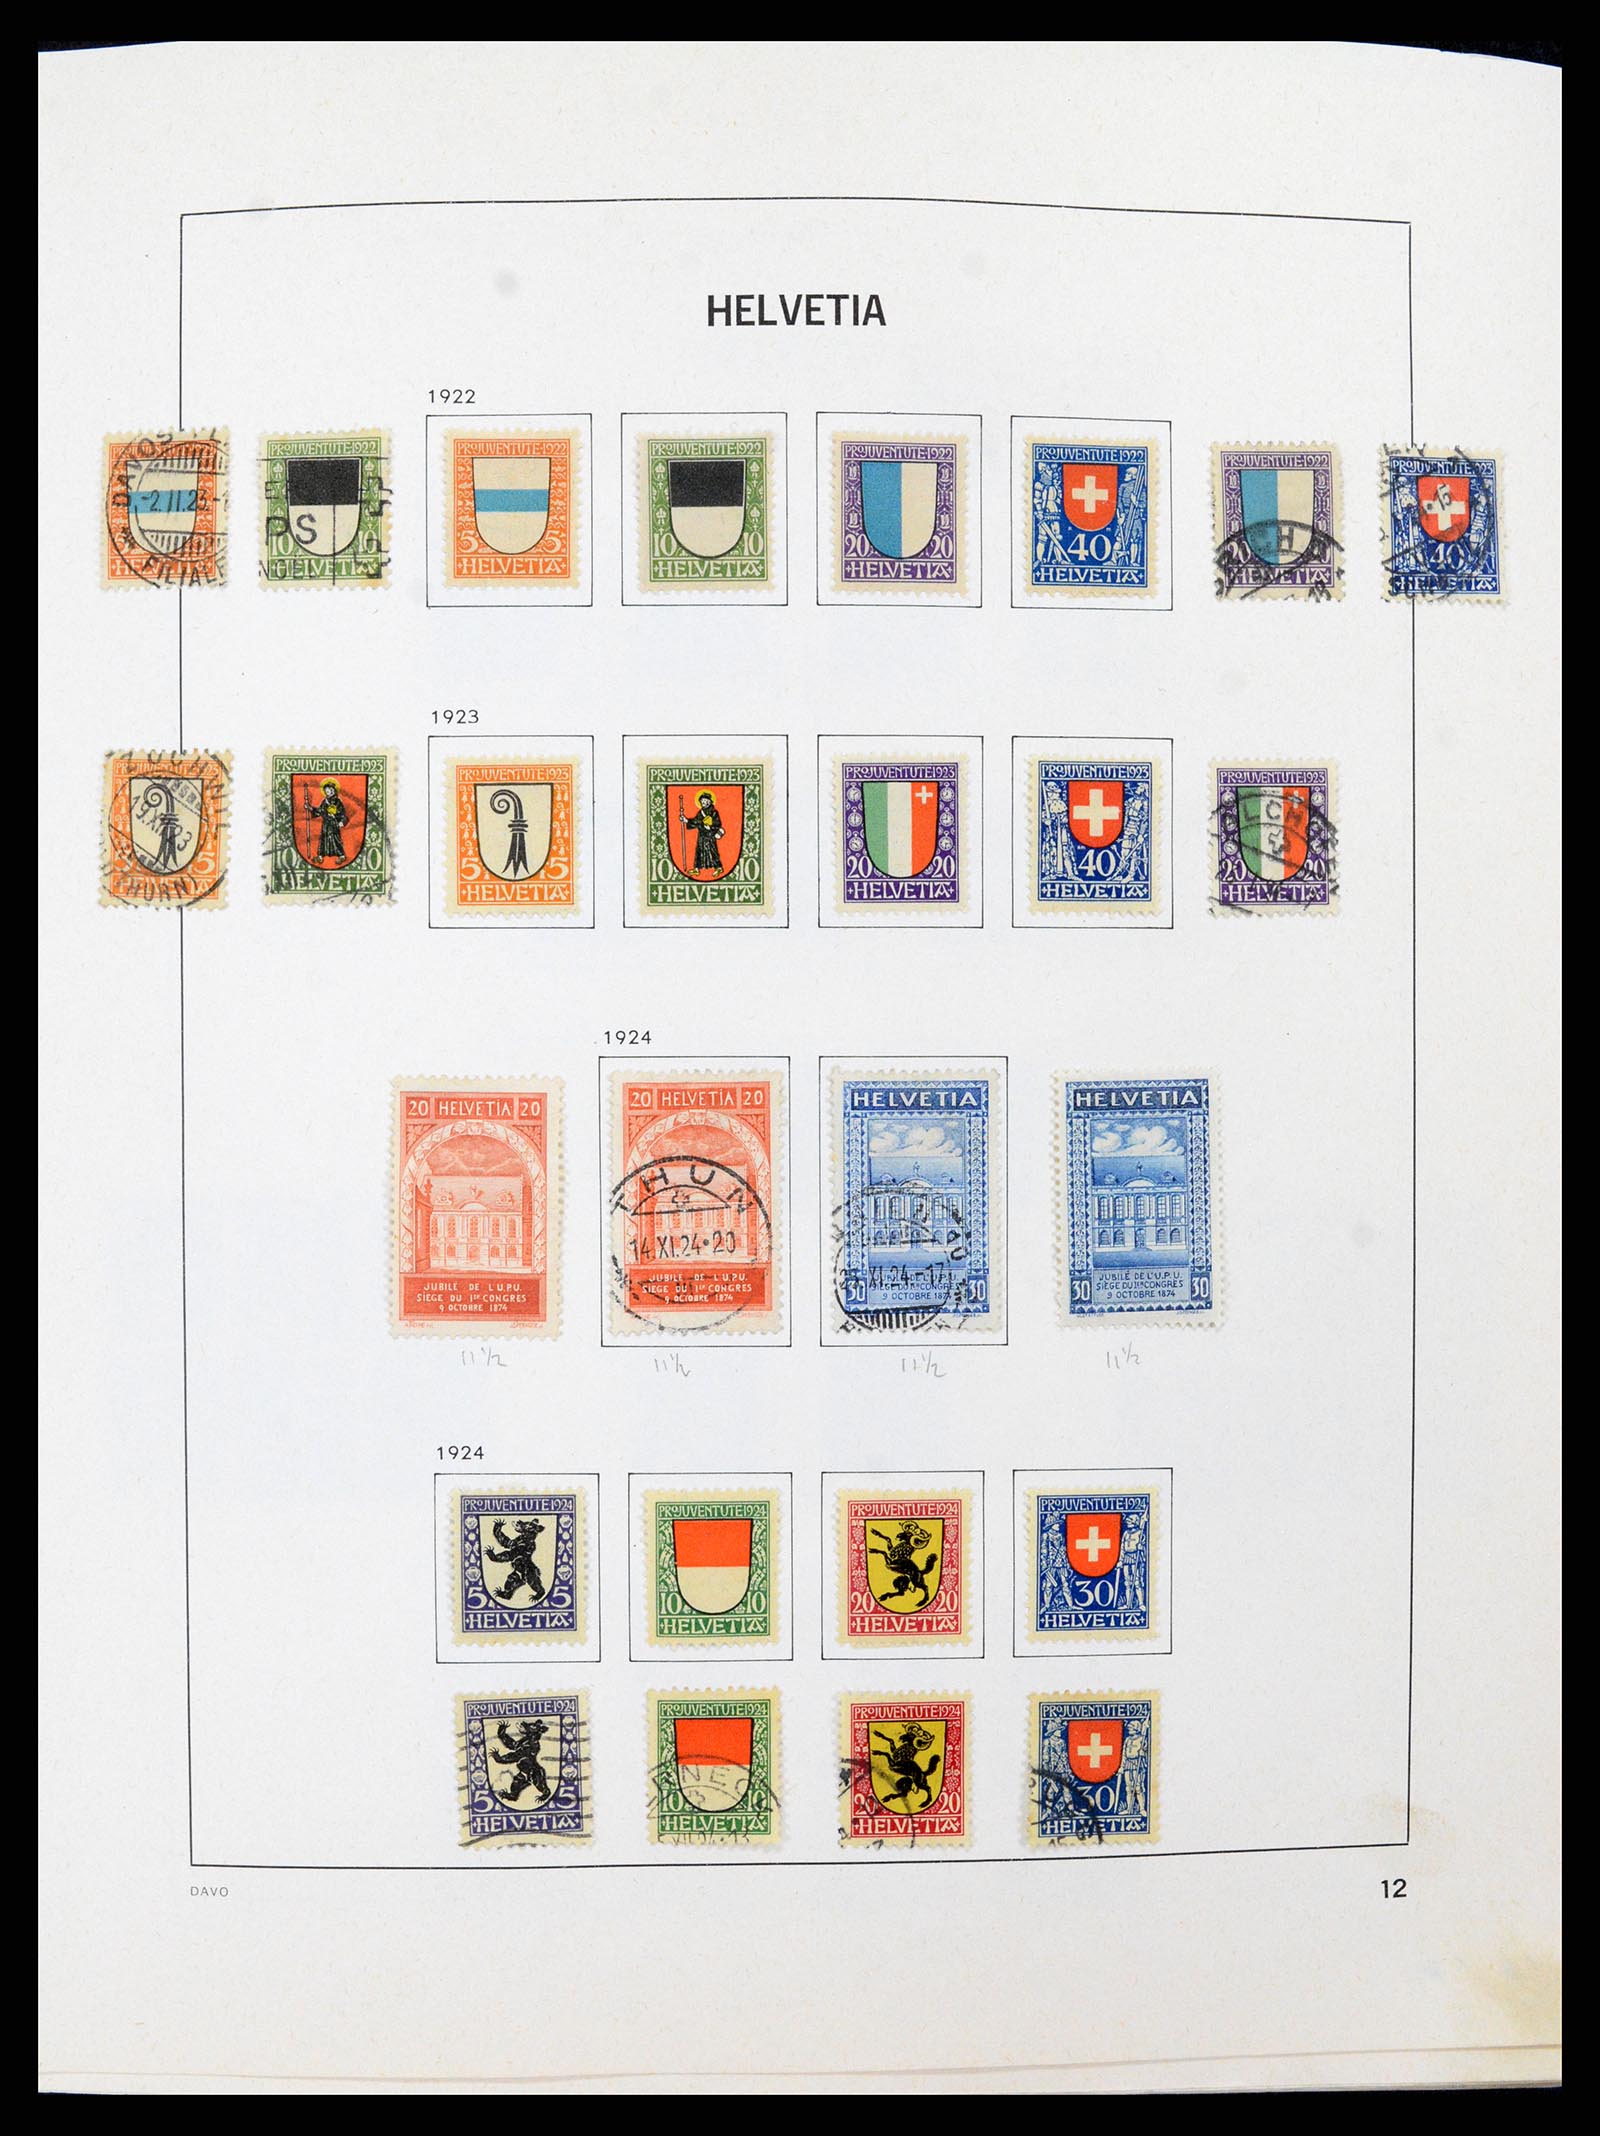 37496 011 - Stamp collection 37496 Switzerland 1854-2002.